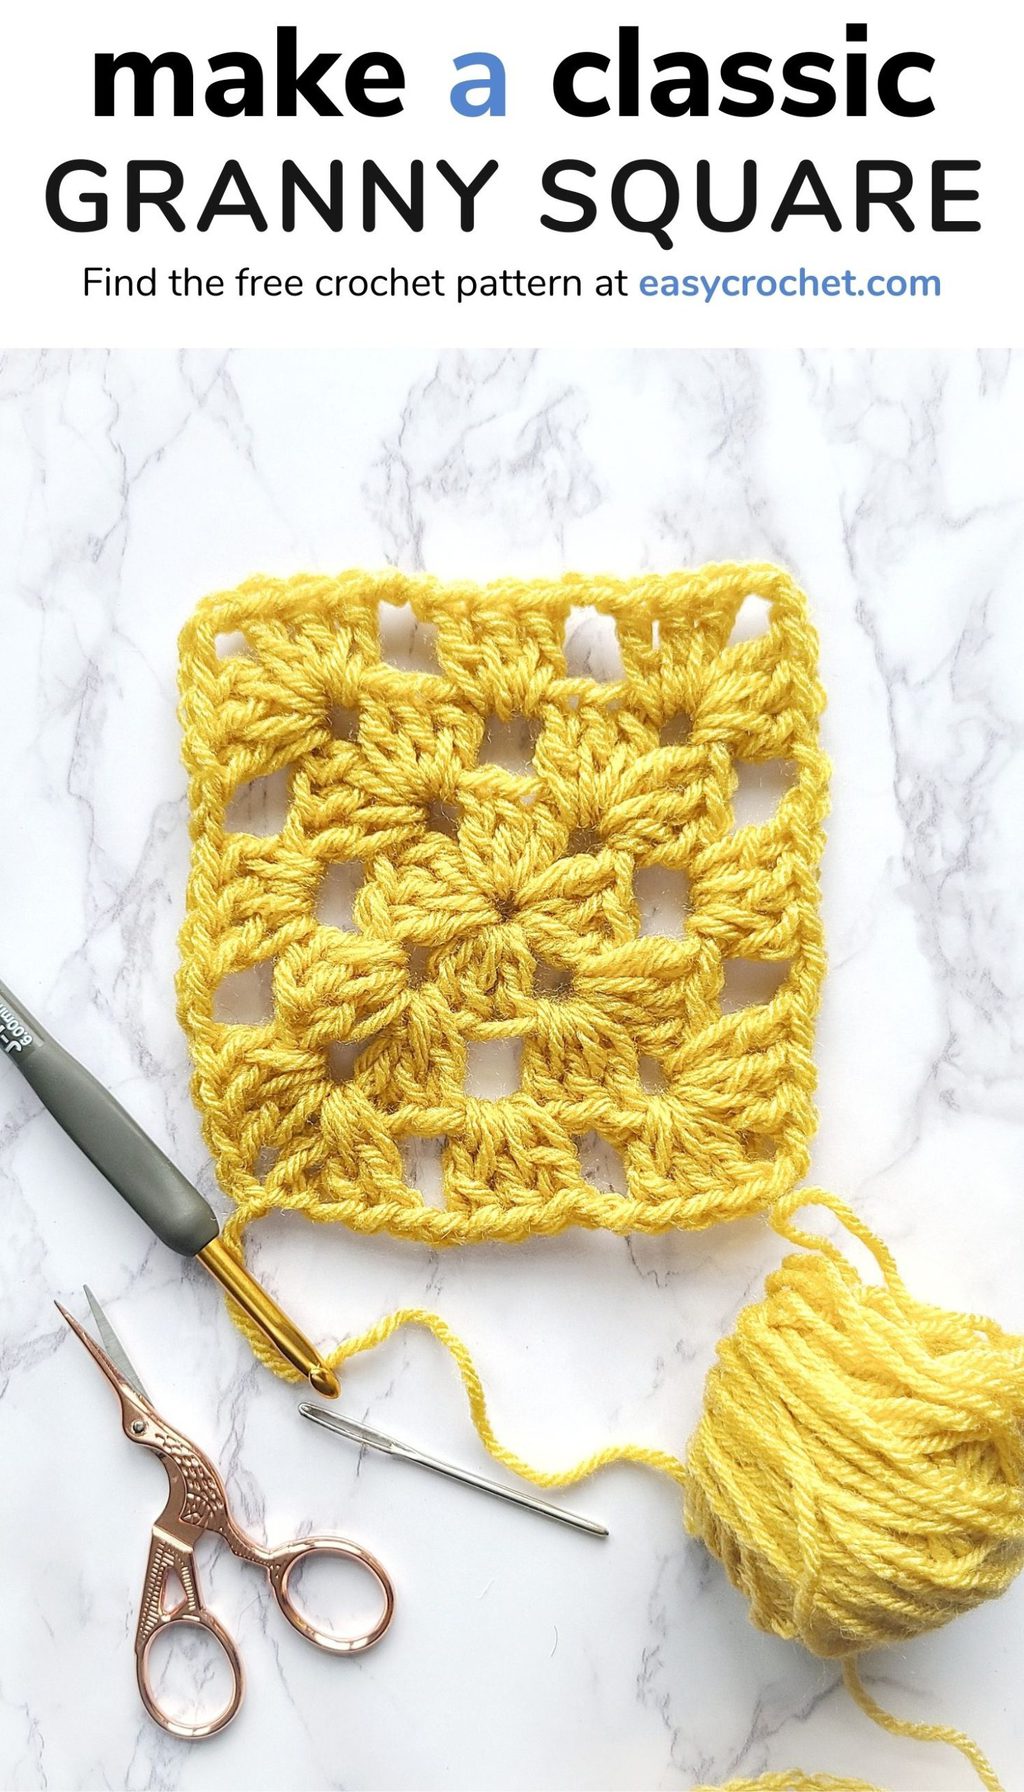 Beginners Guide to Making a Granny Square in Crochet via @easycrochetcom